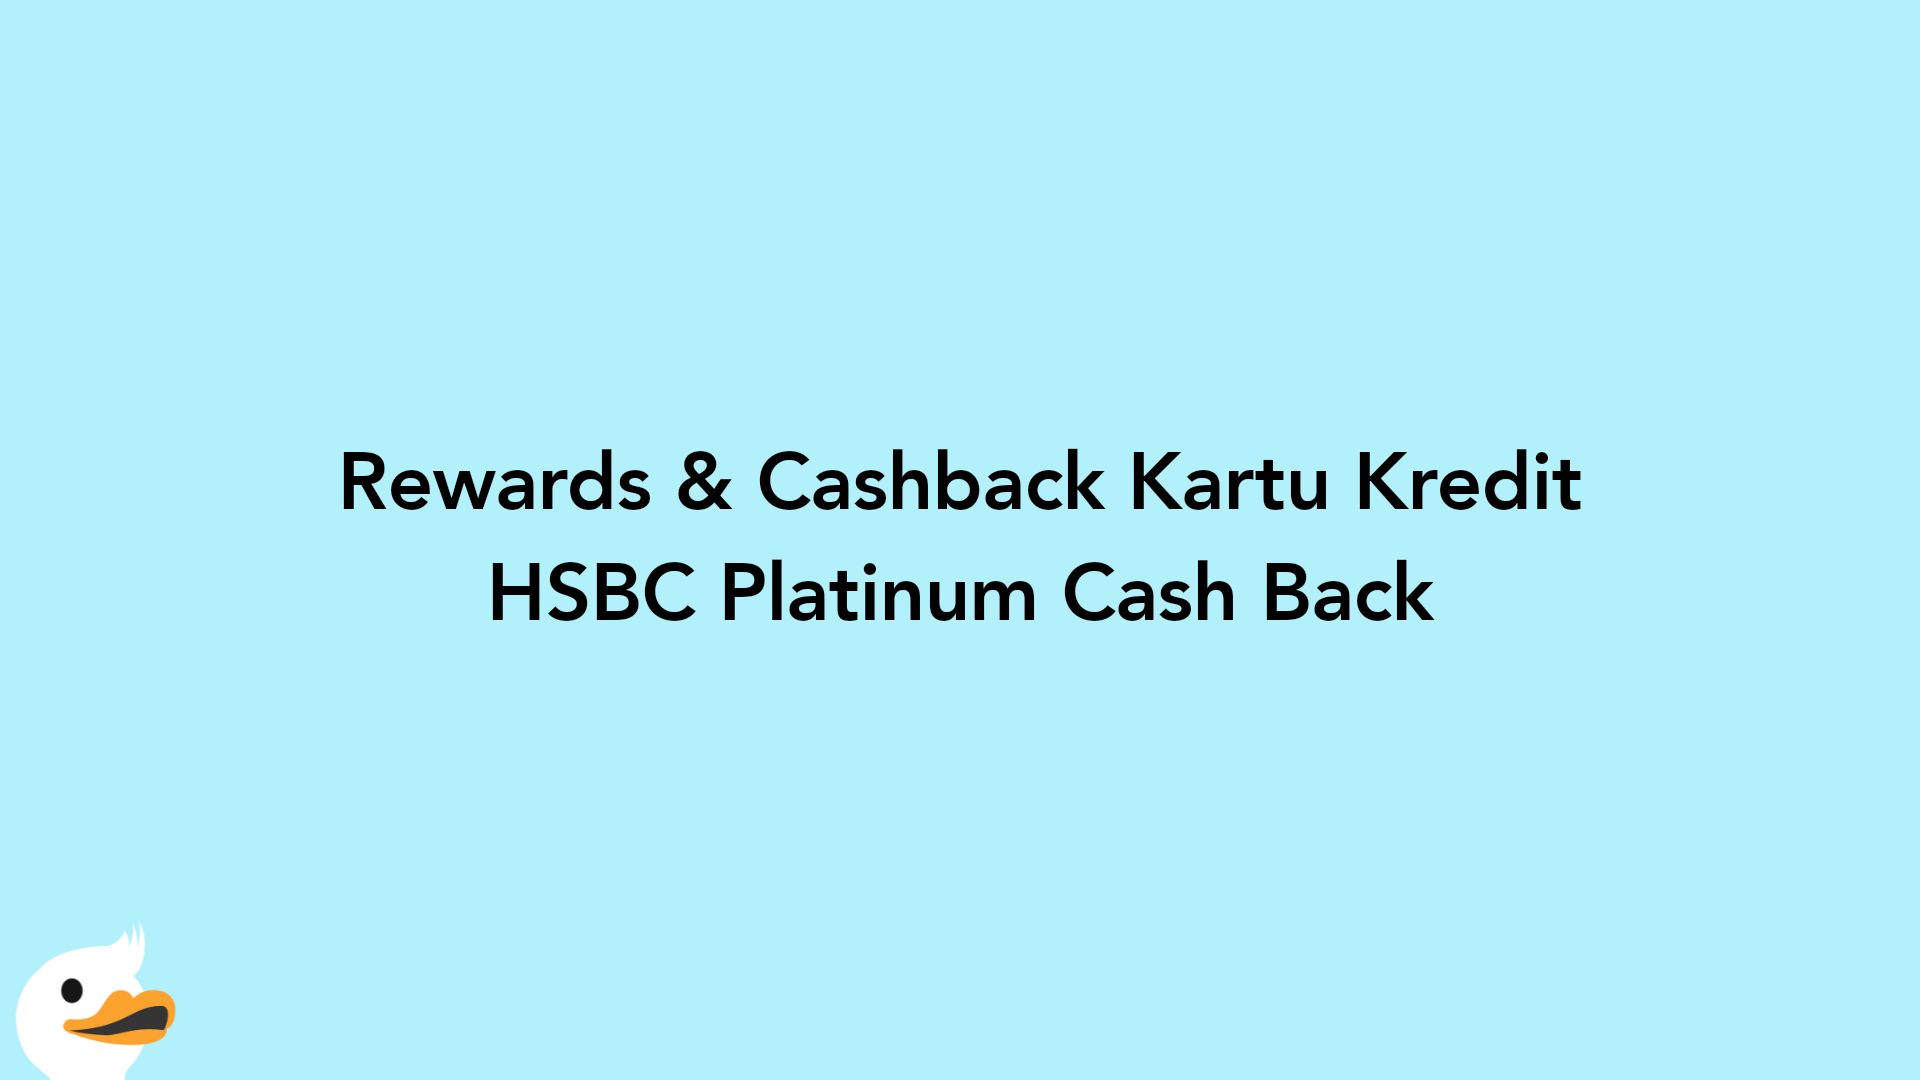 Rewards & Cashback Kartu Kredit HSBC Platinum Cash Back